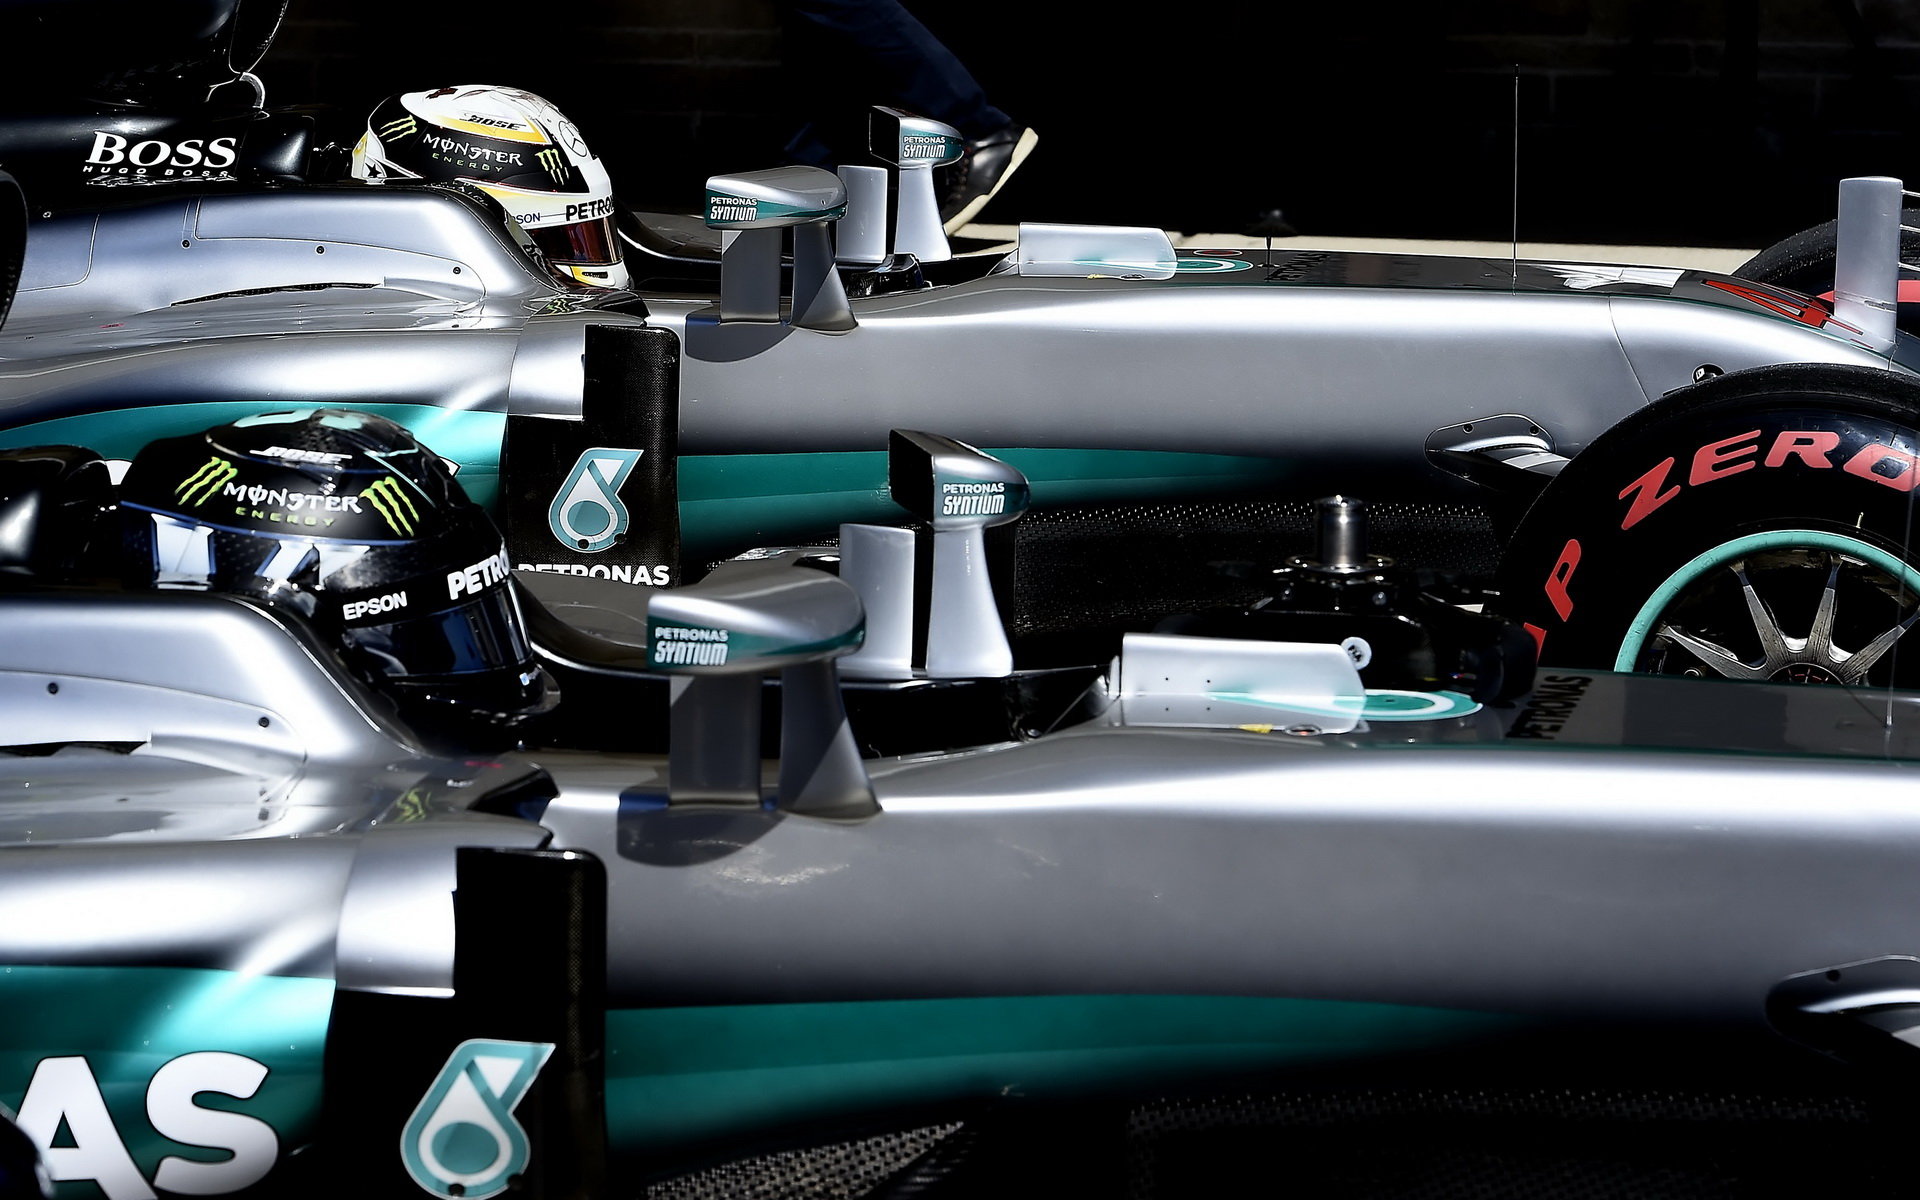 Nico Rosberg a Lewis Hamilton po kvalifikaci v Austinu